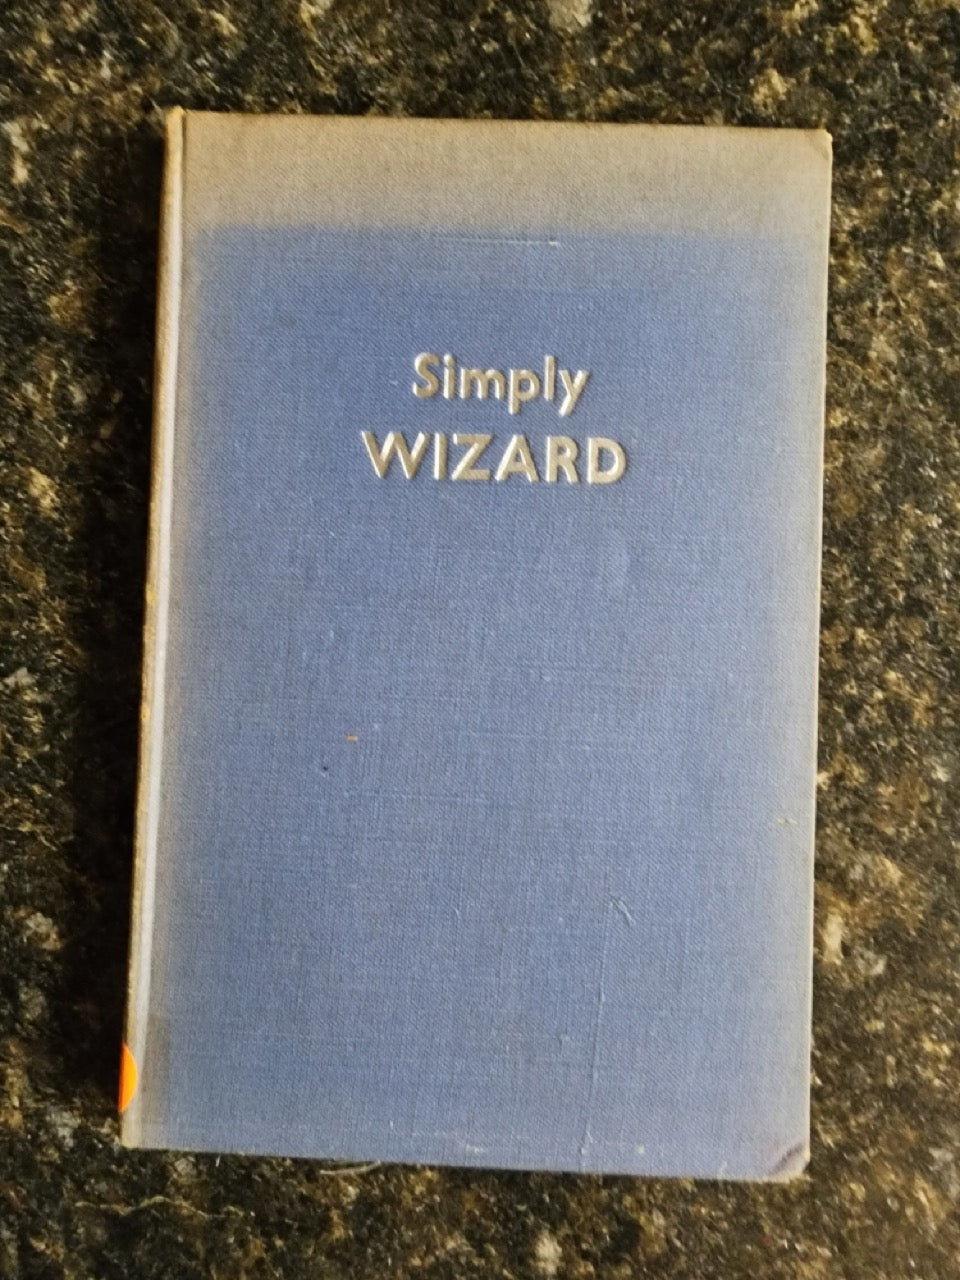 Simply Wizard - Goodliffe